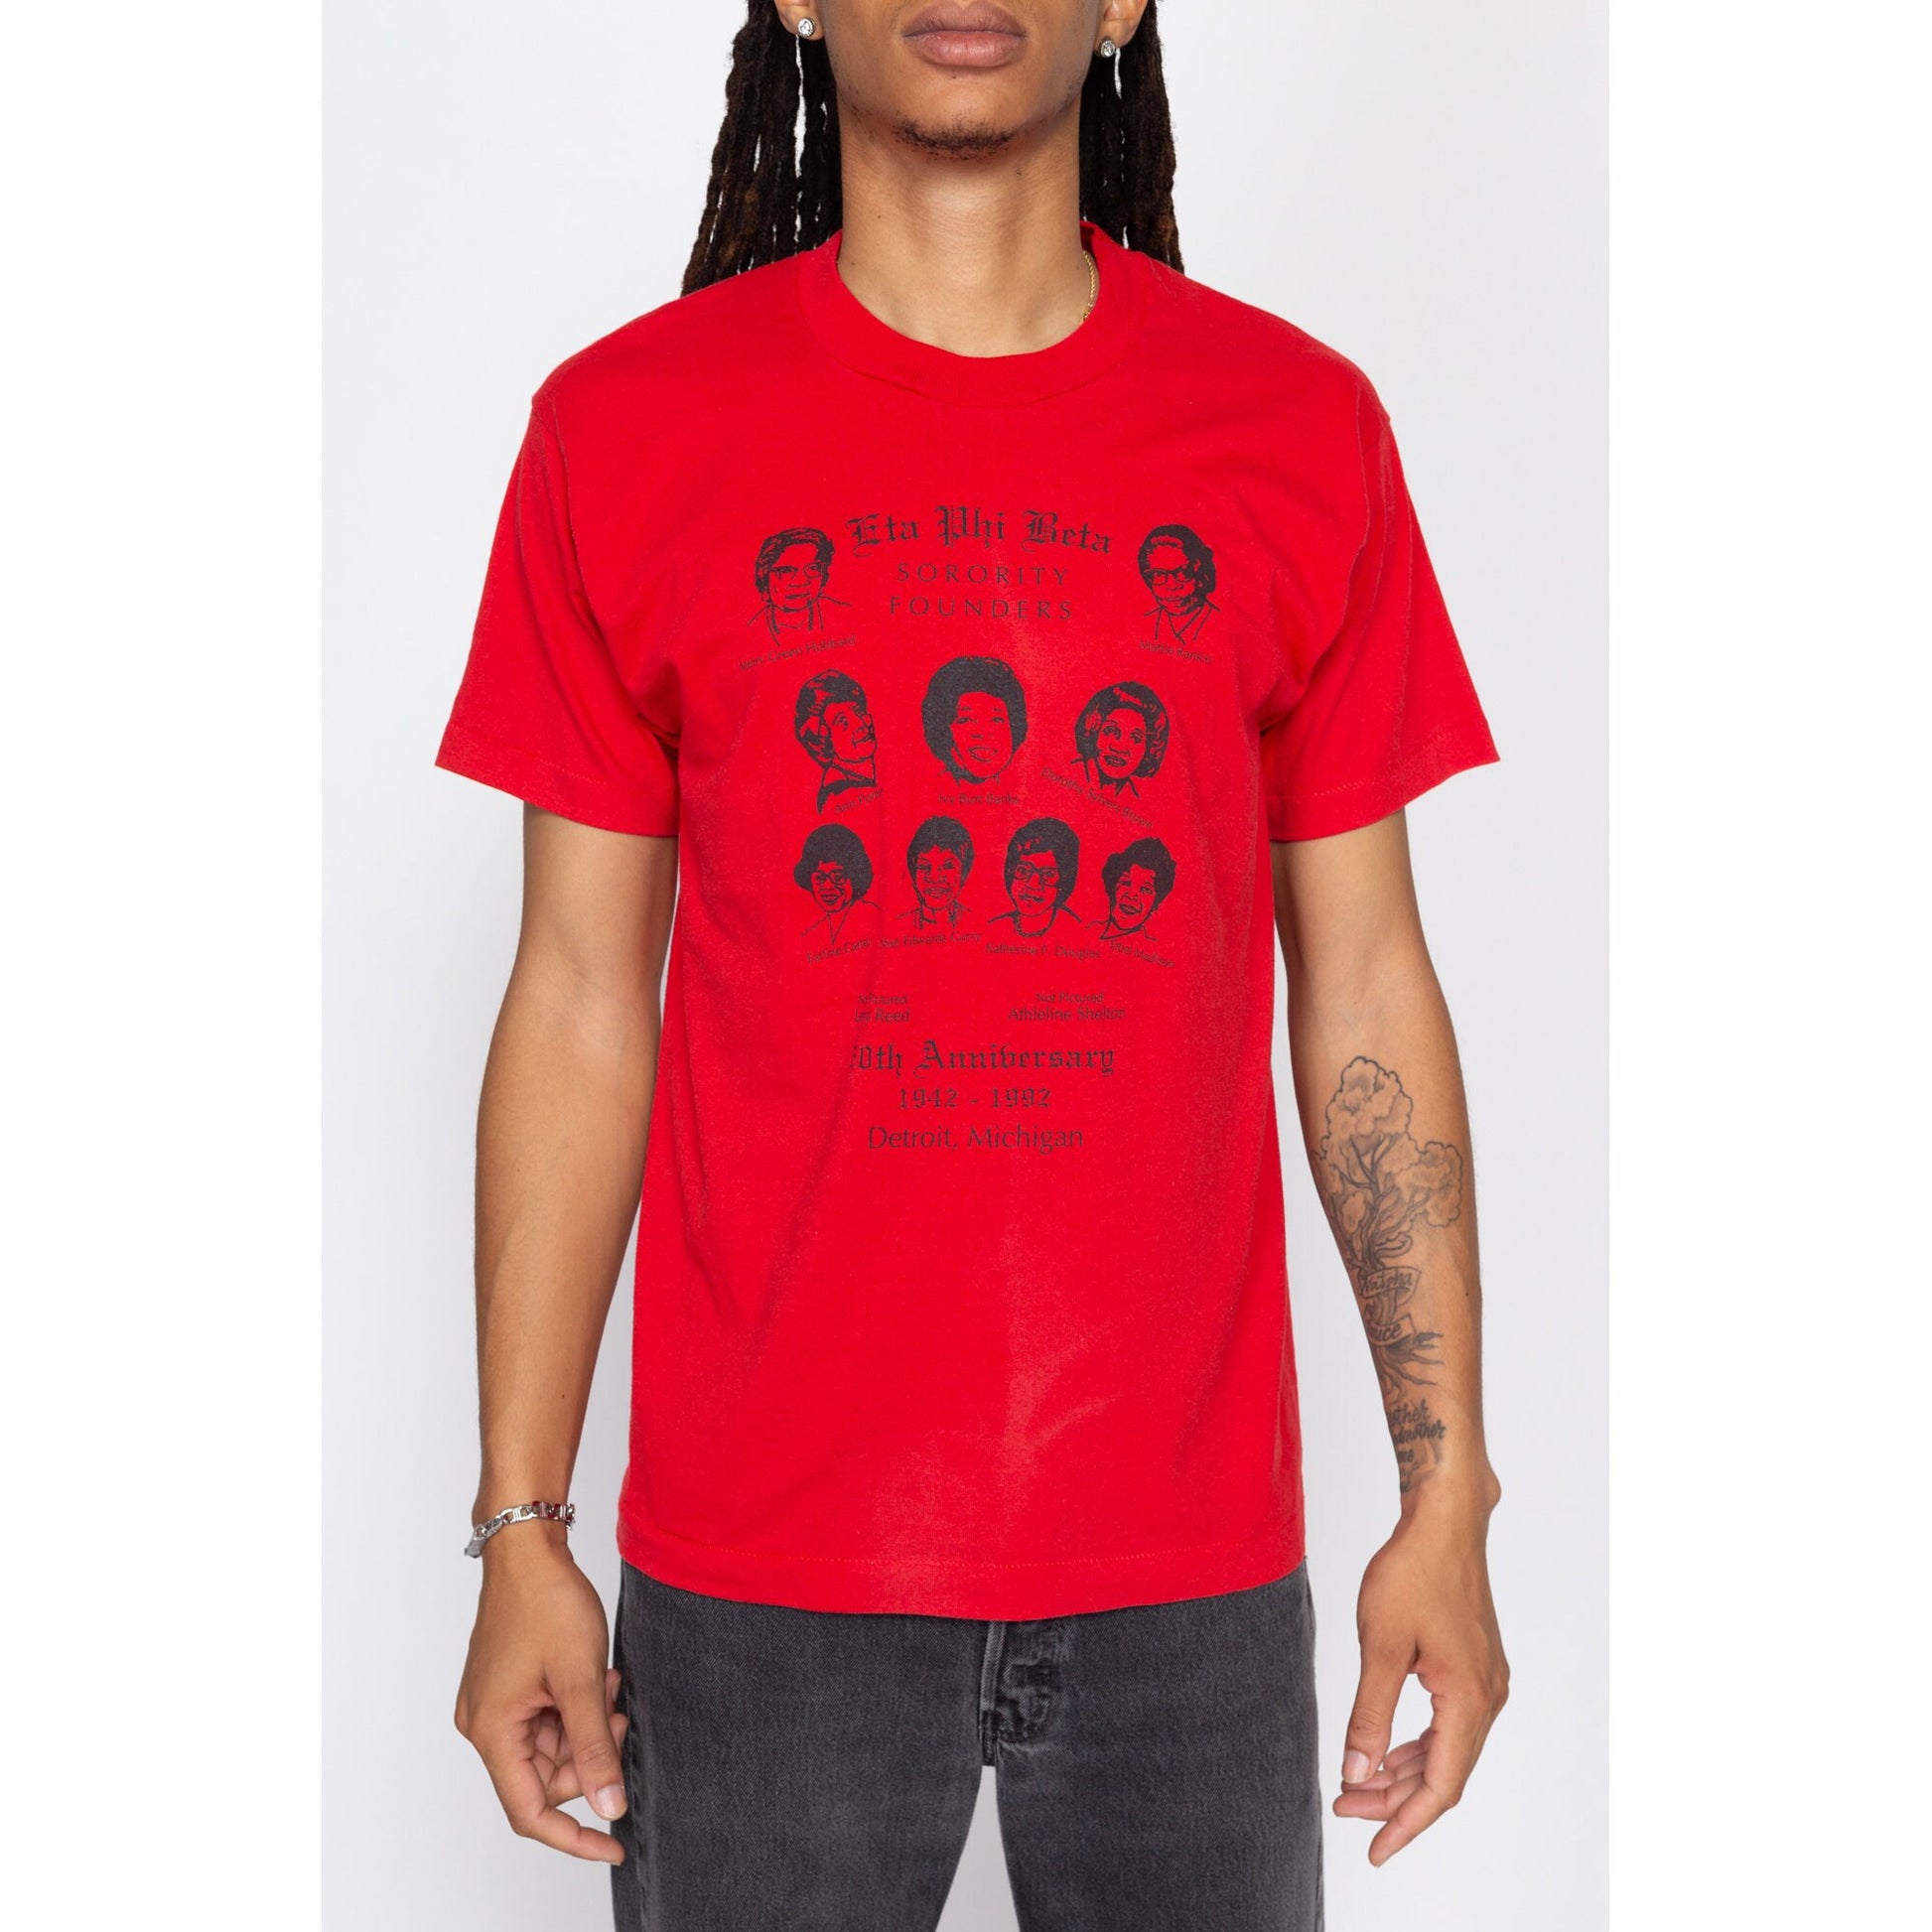 Medium 90 Eta Phi Beta Sorority 50th Anniversary T Shirt | Vintage Black History Detroit Michigan Red Graphic T Shirt